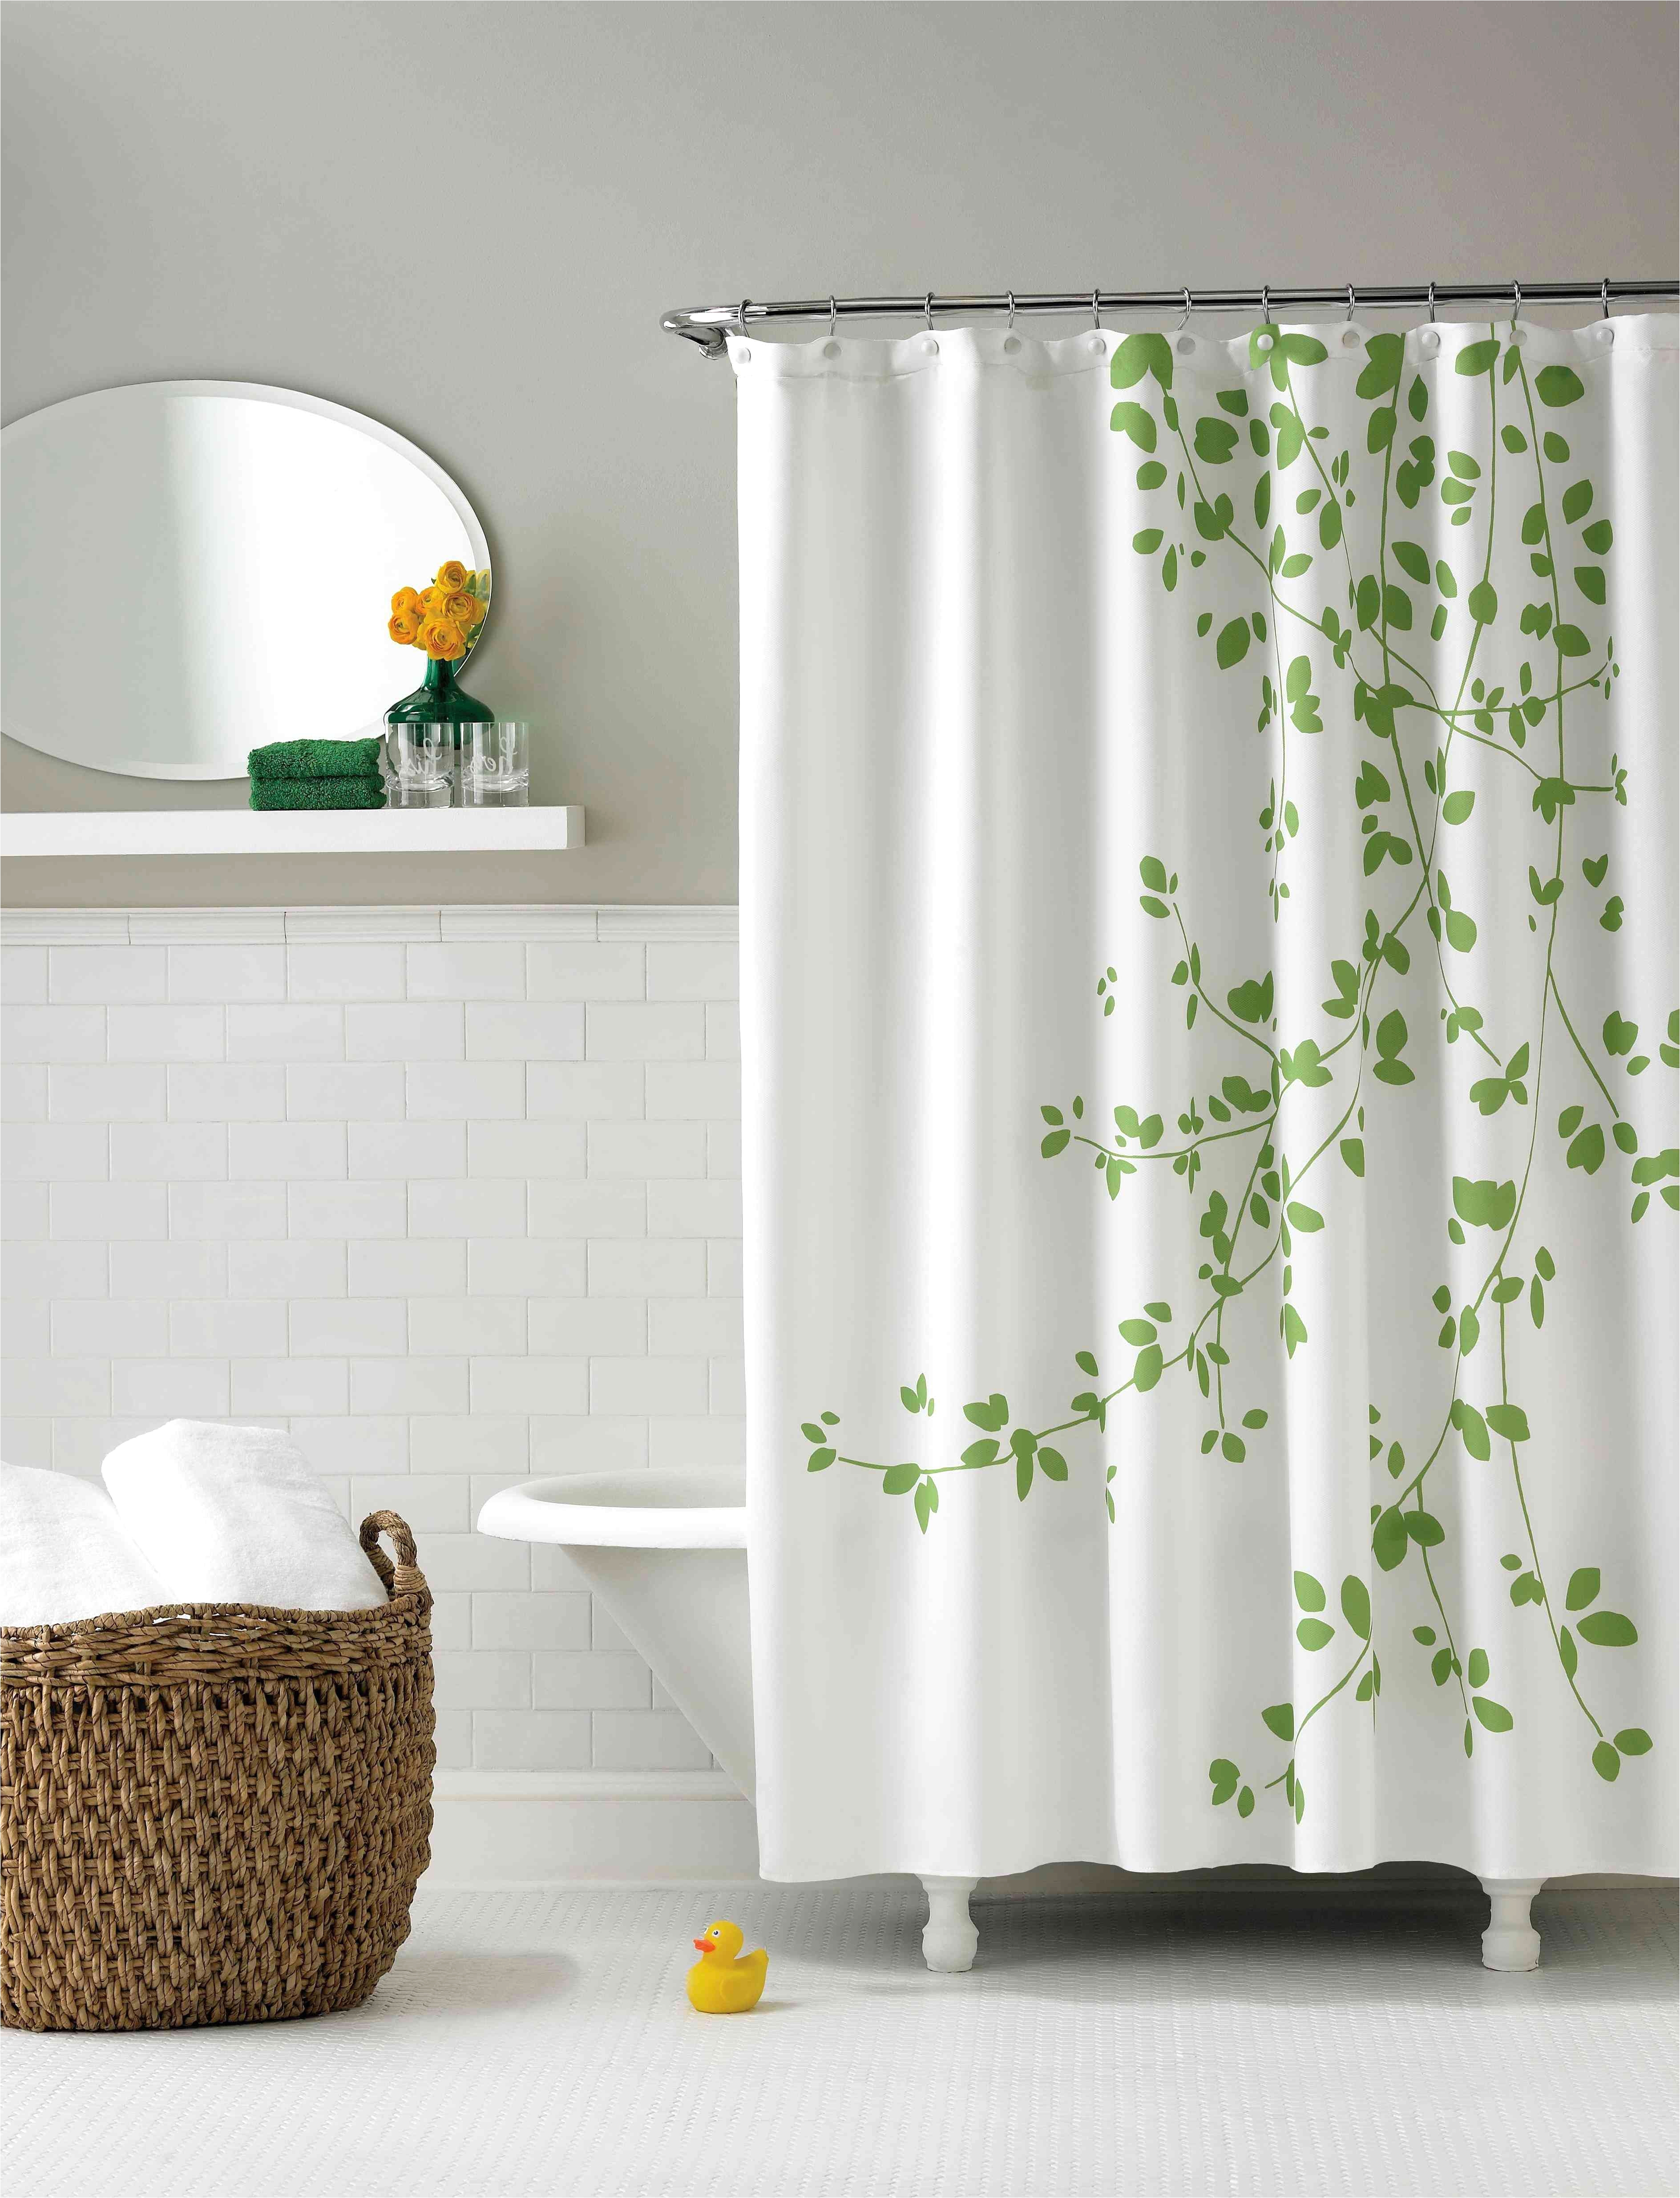 green bathroom accessories set fresh 35 unique bathtub and shower liners